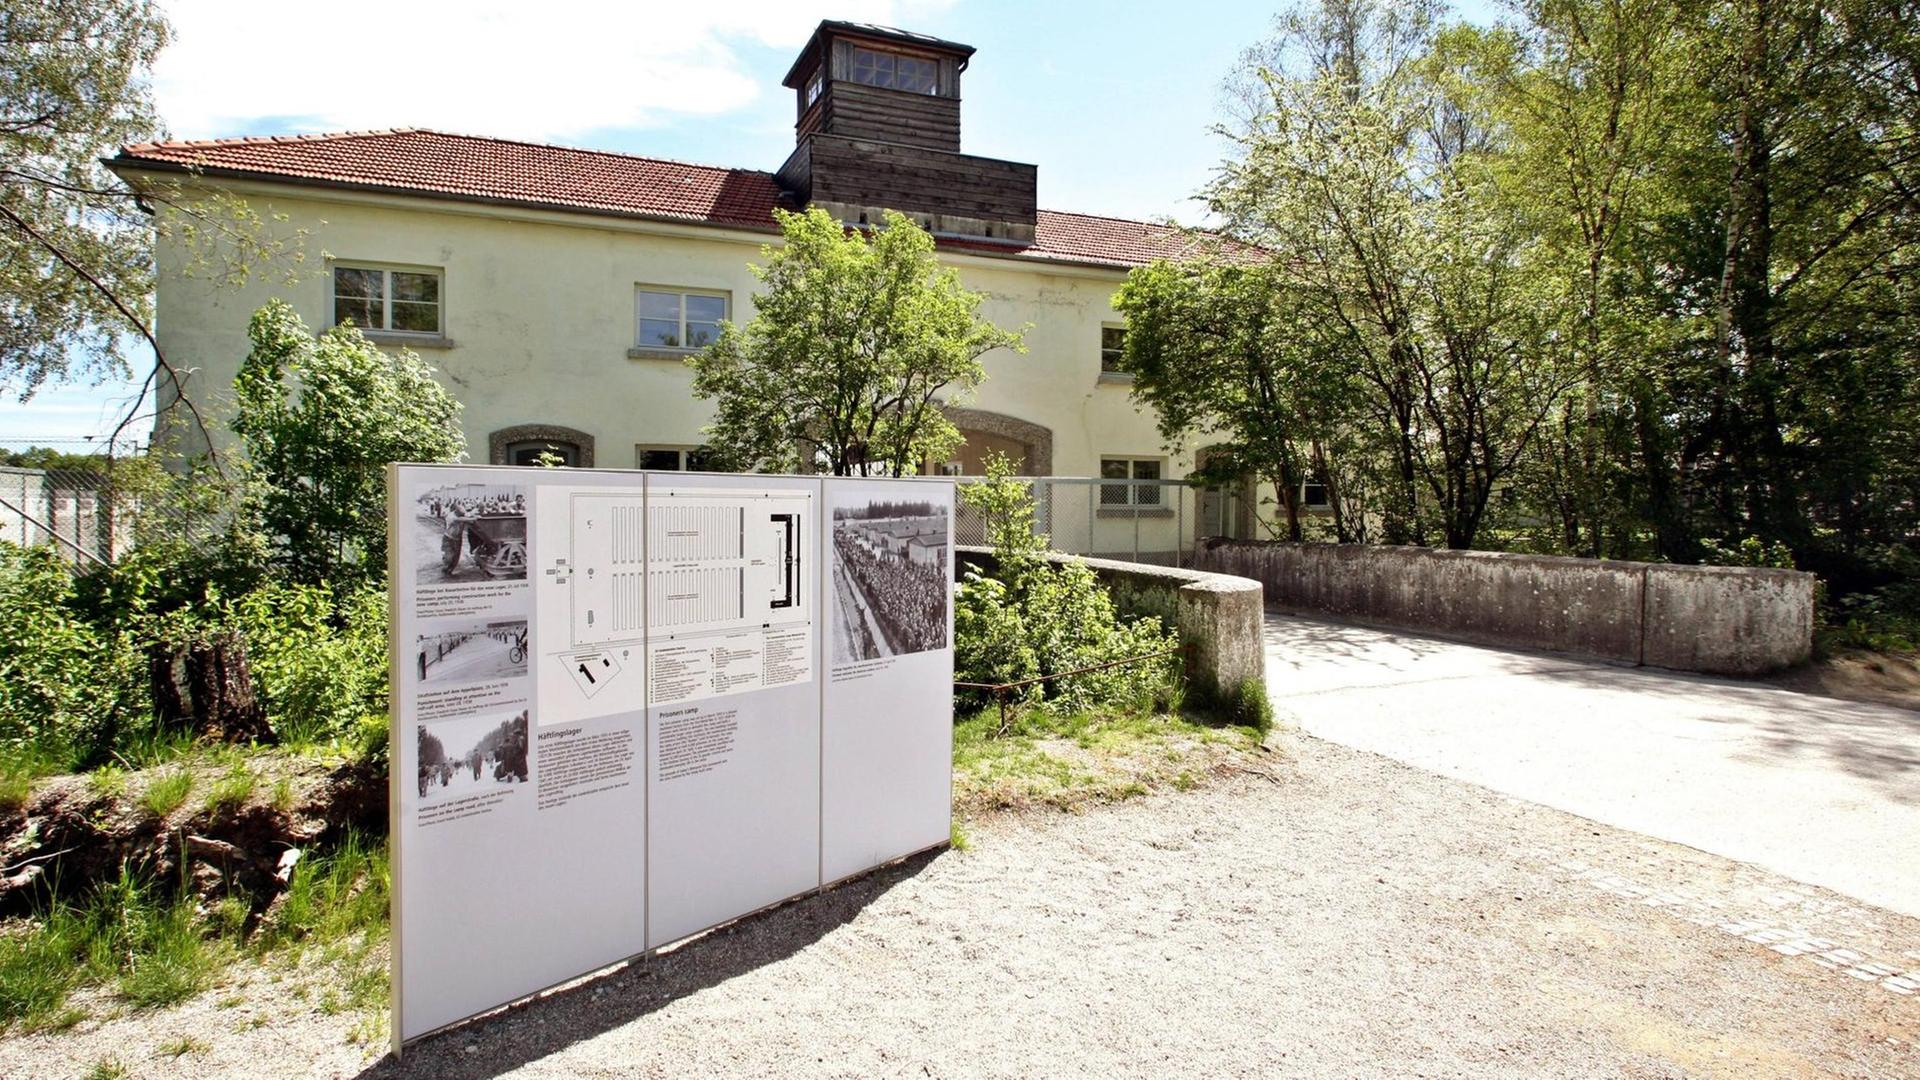 Schautafeln am Besuchereingang der KZ-Gedenkstätte Dachau.